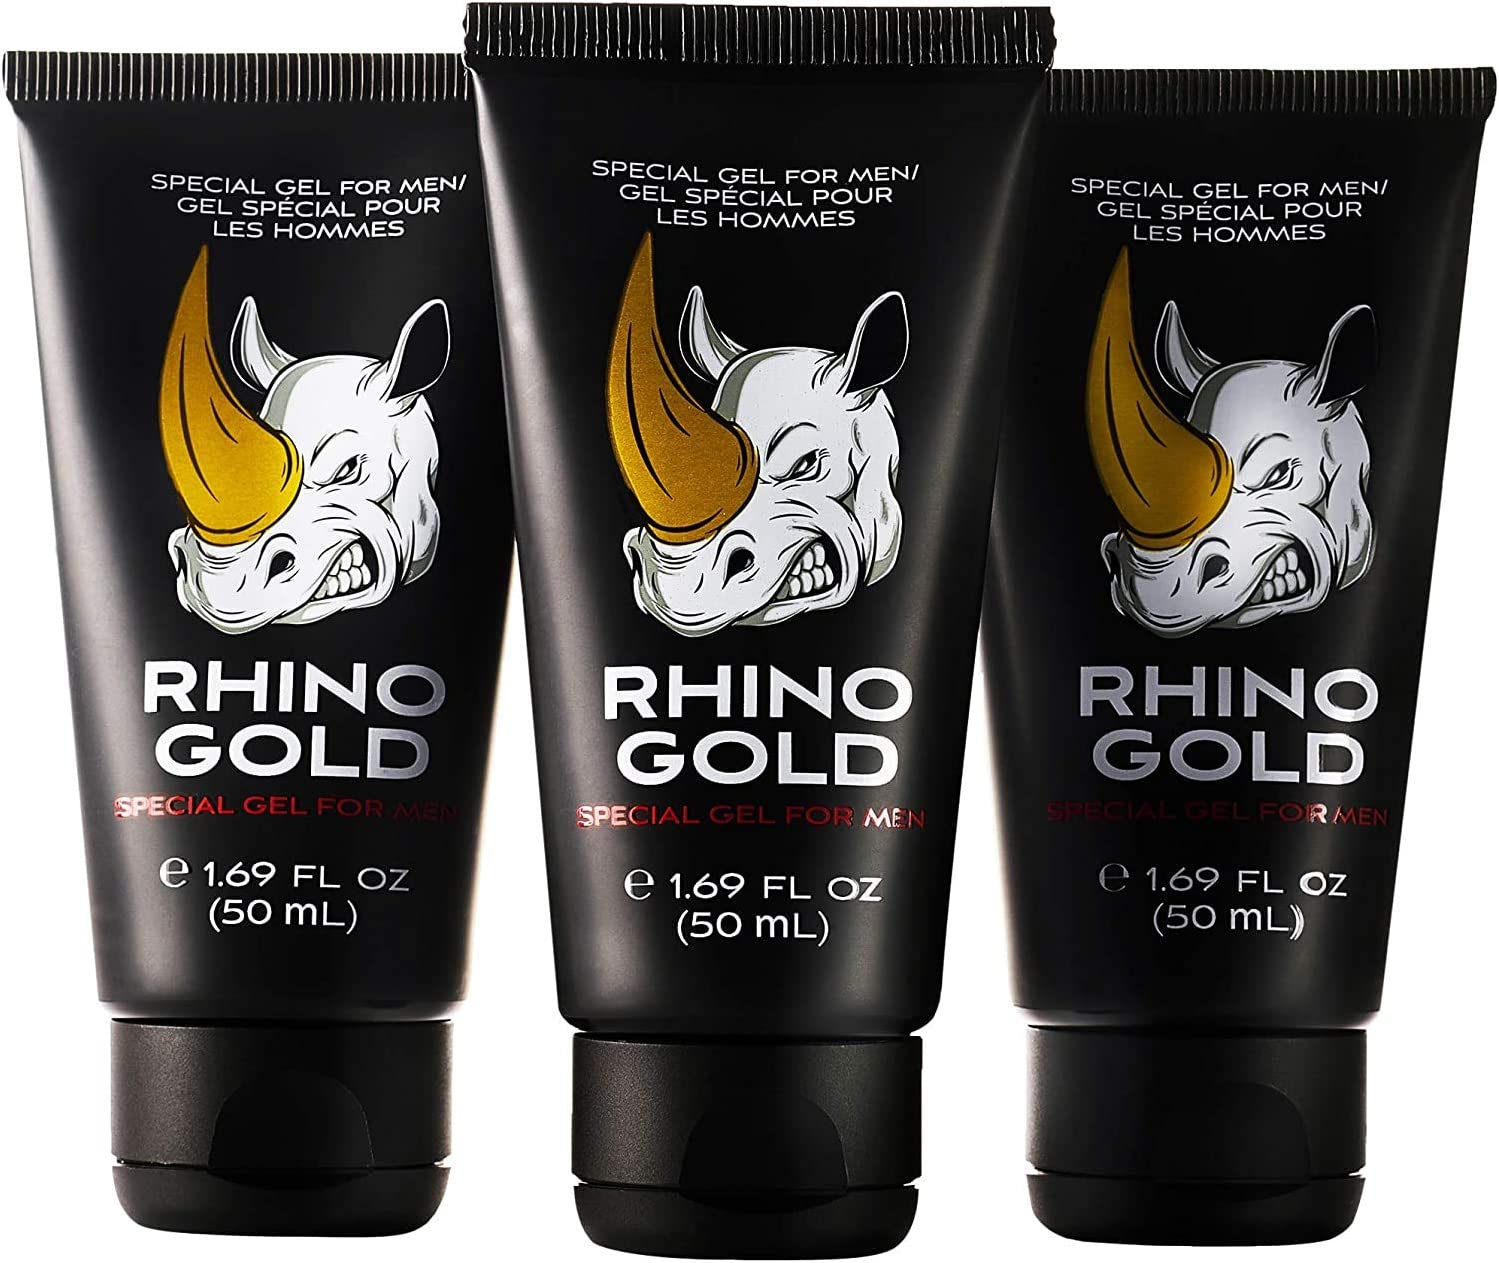 Rhino Gold Gel - Plafar - Catena - Farmacia Tei - Dr max